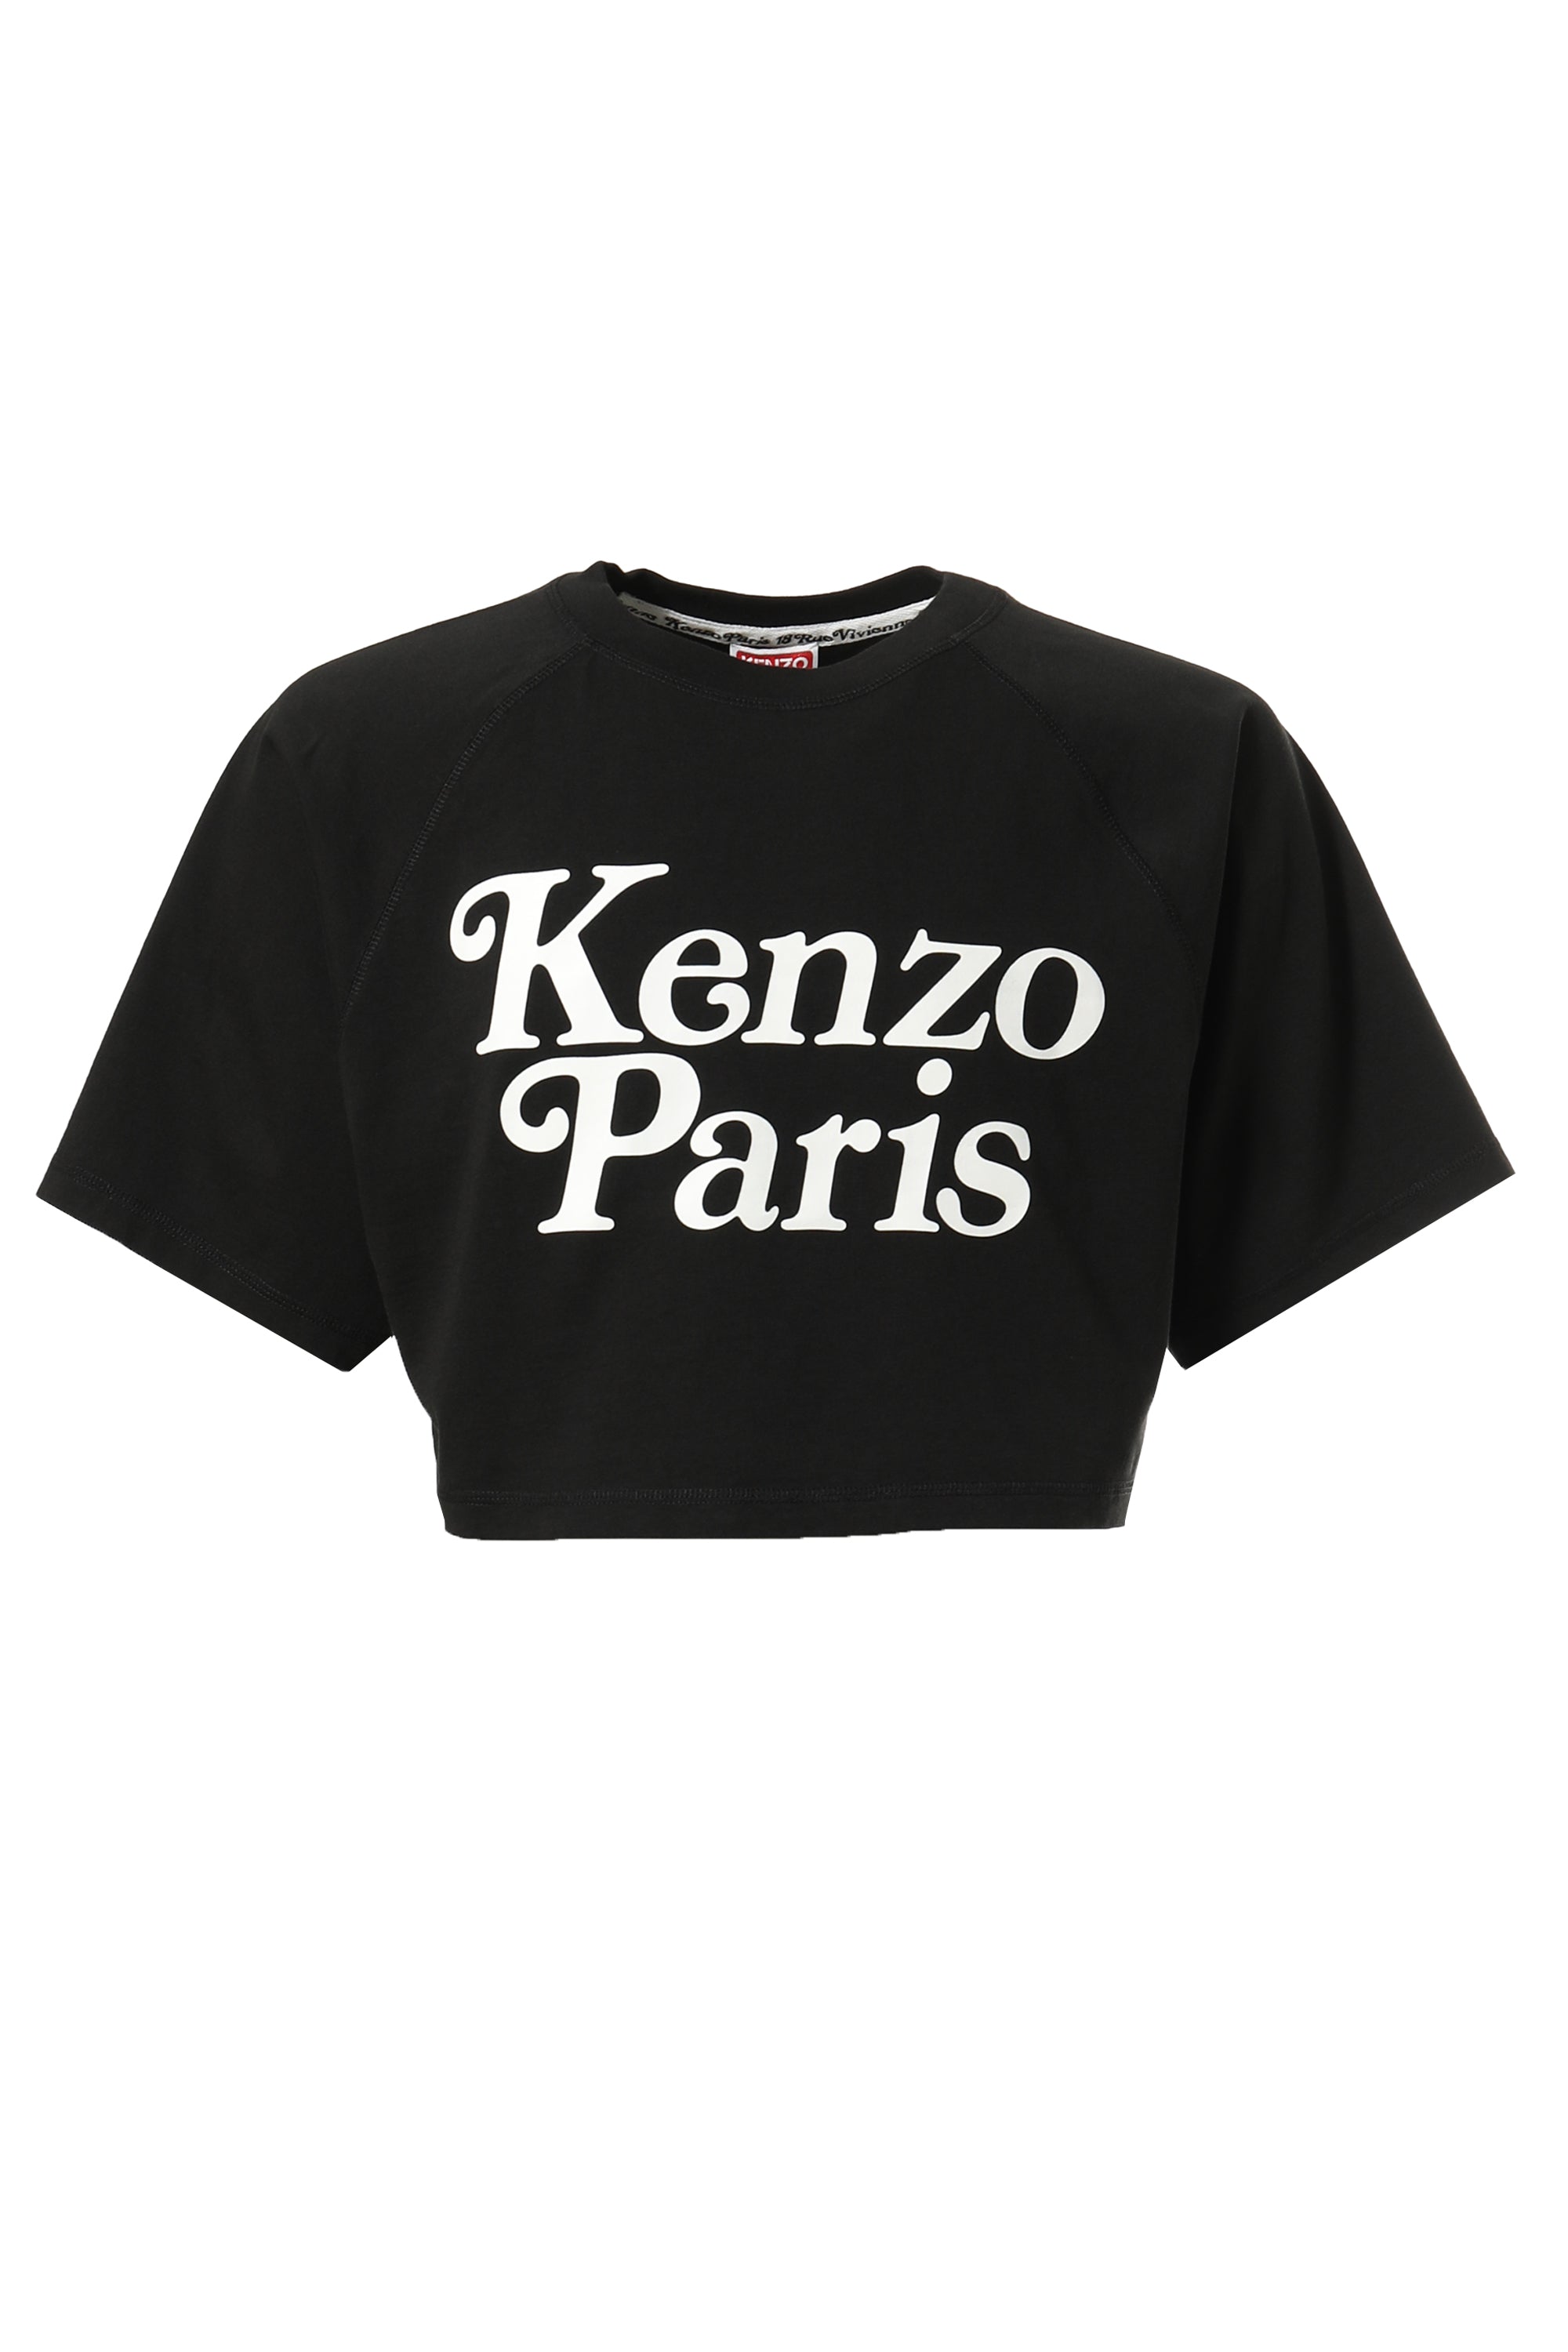 Kenzo X Verdy Satin Shirt